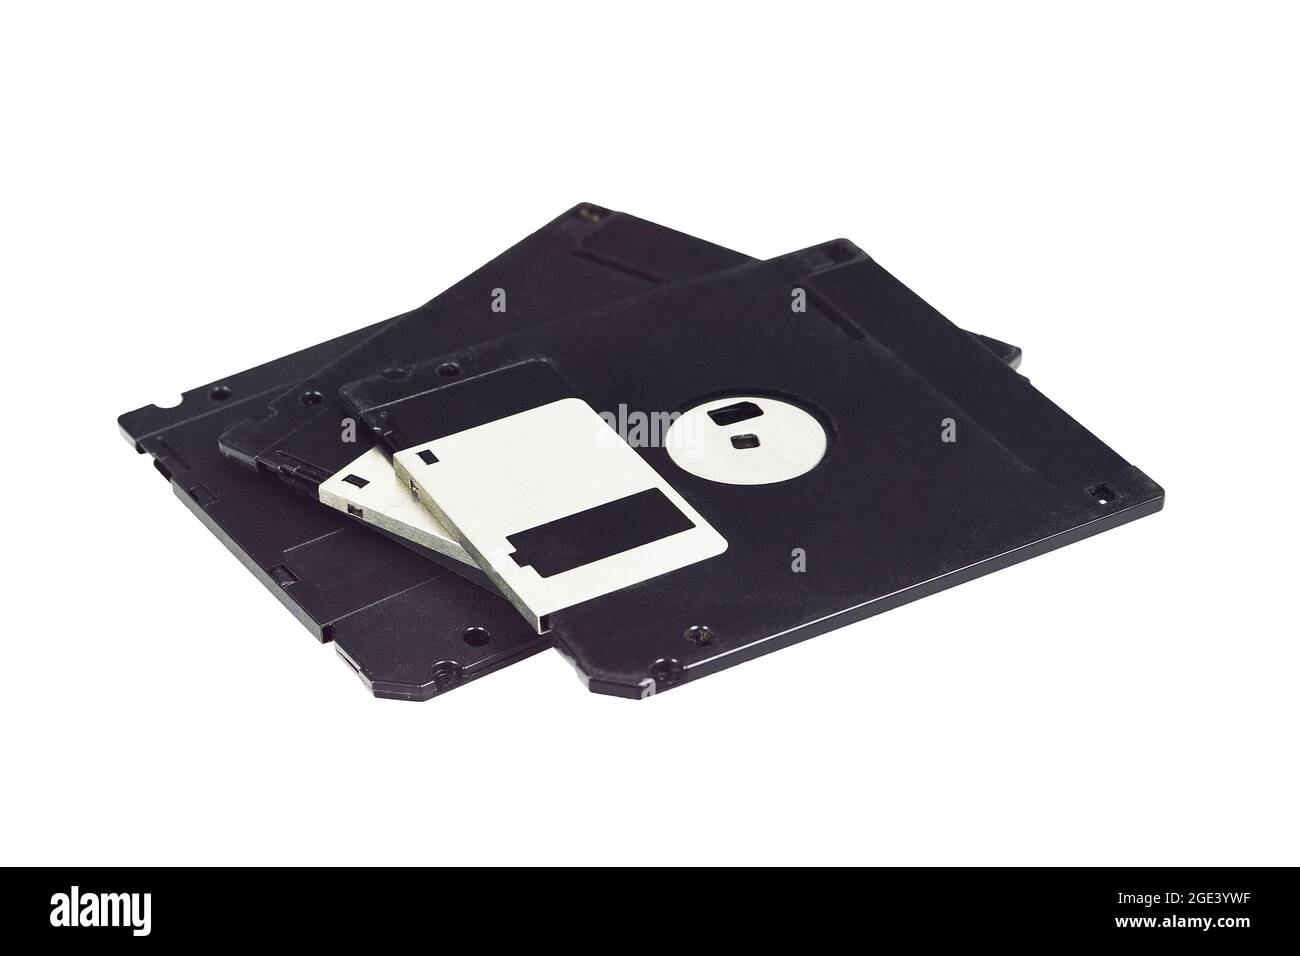 Floppy disks isolated on white background Stock Photo